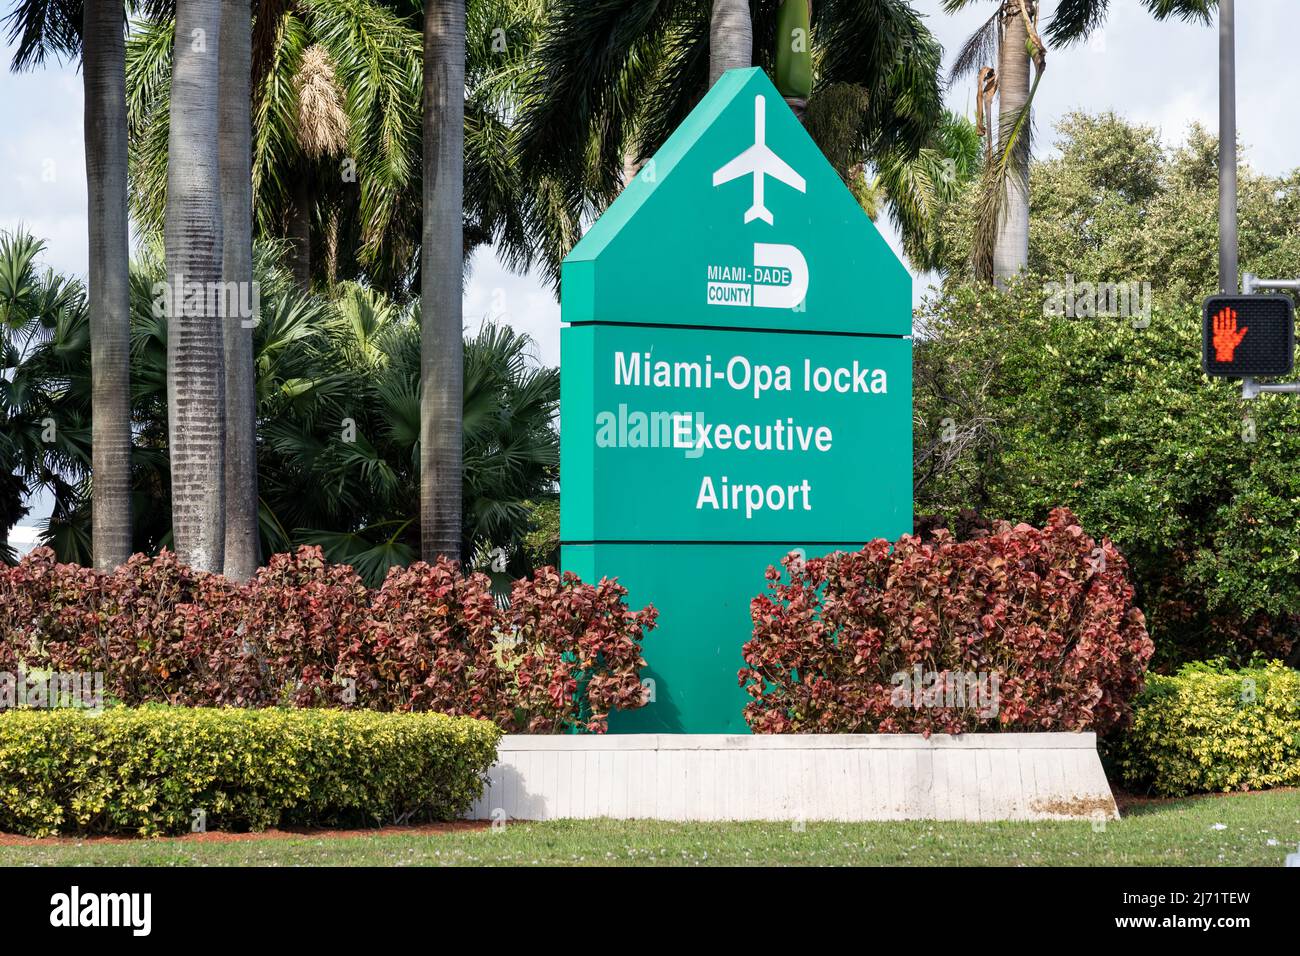 OPA Locka, FL, USA - 2 janvier 2022 : le panneau de l'aéroport exécutif de Miami Opa Locka est affiché à Opa Locka, FL, USA. Miami Banque D'Images